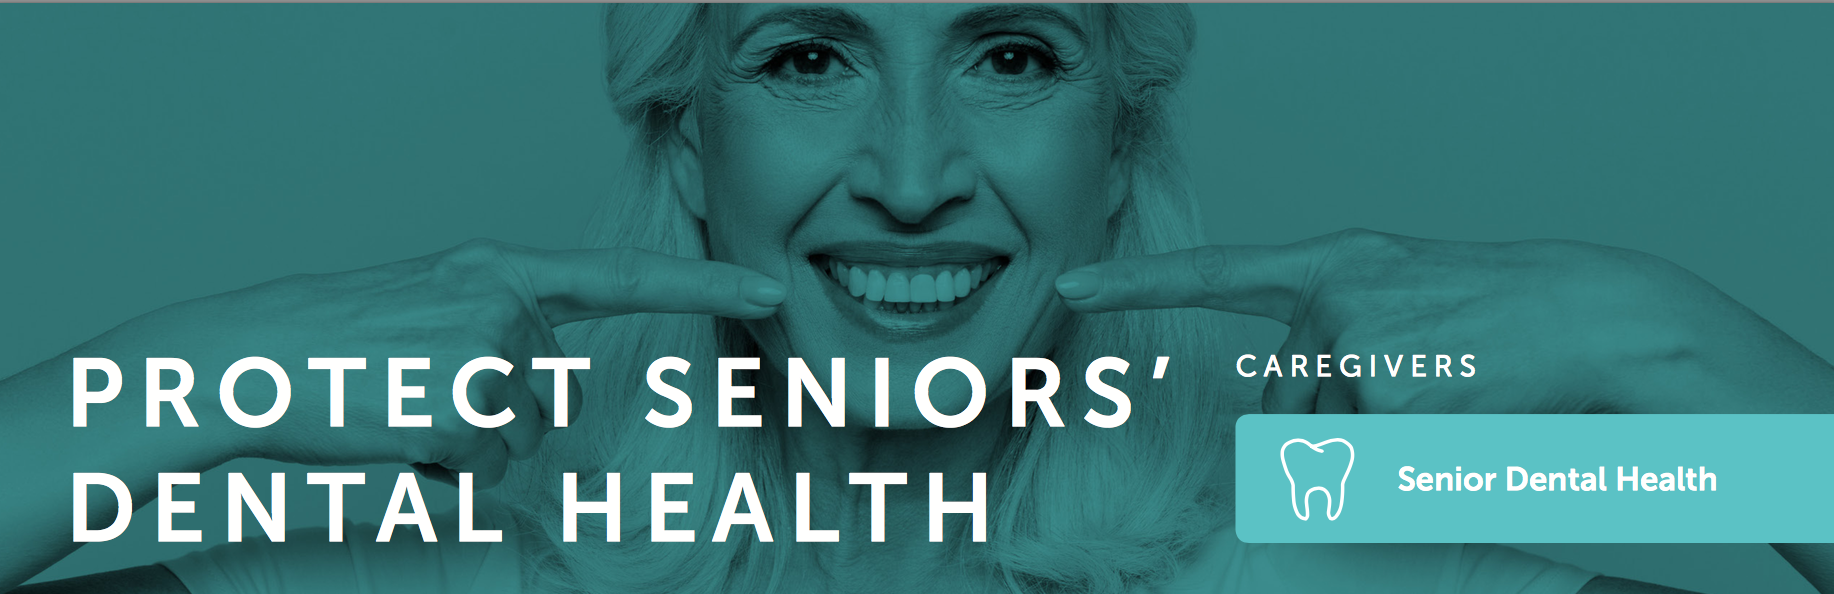 Protect senior's dental health.